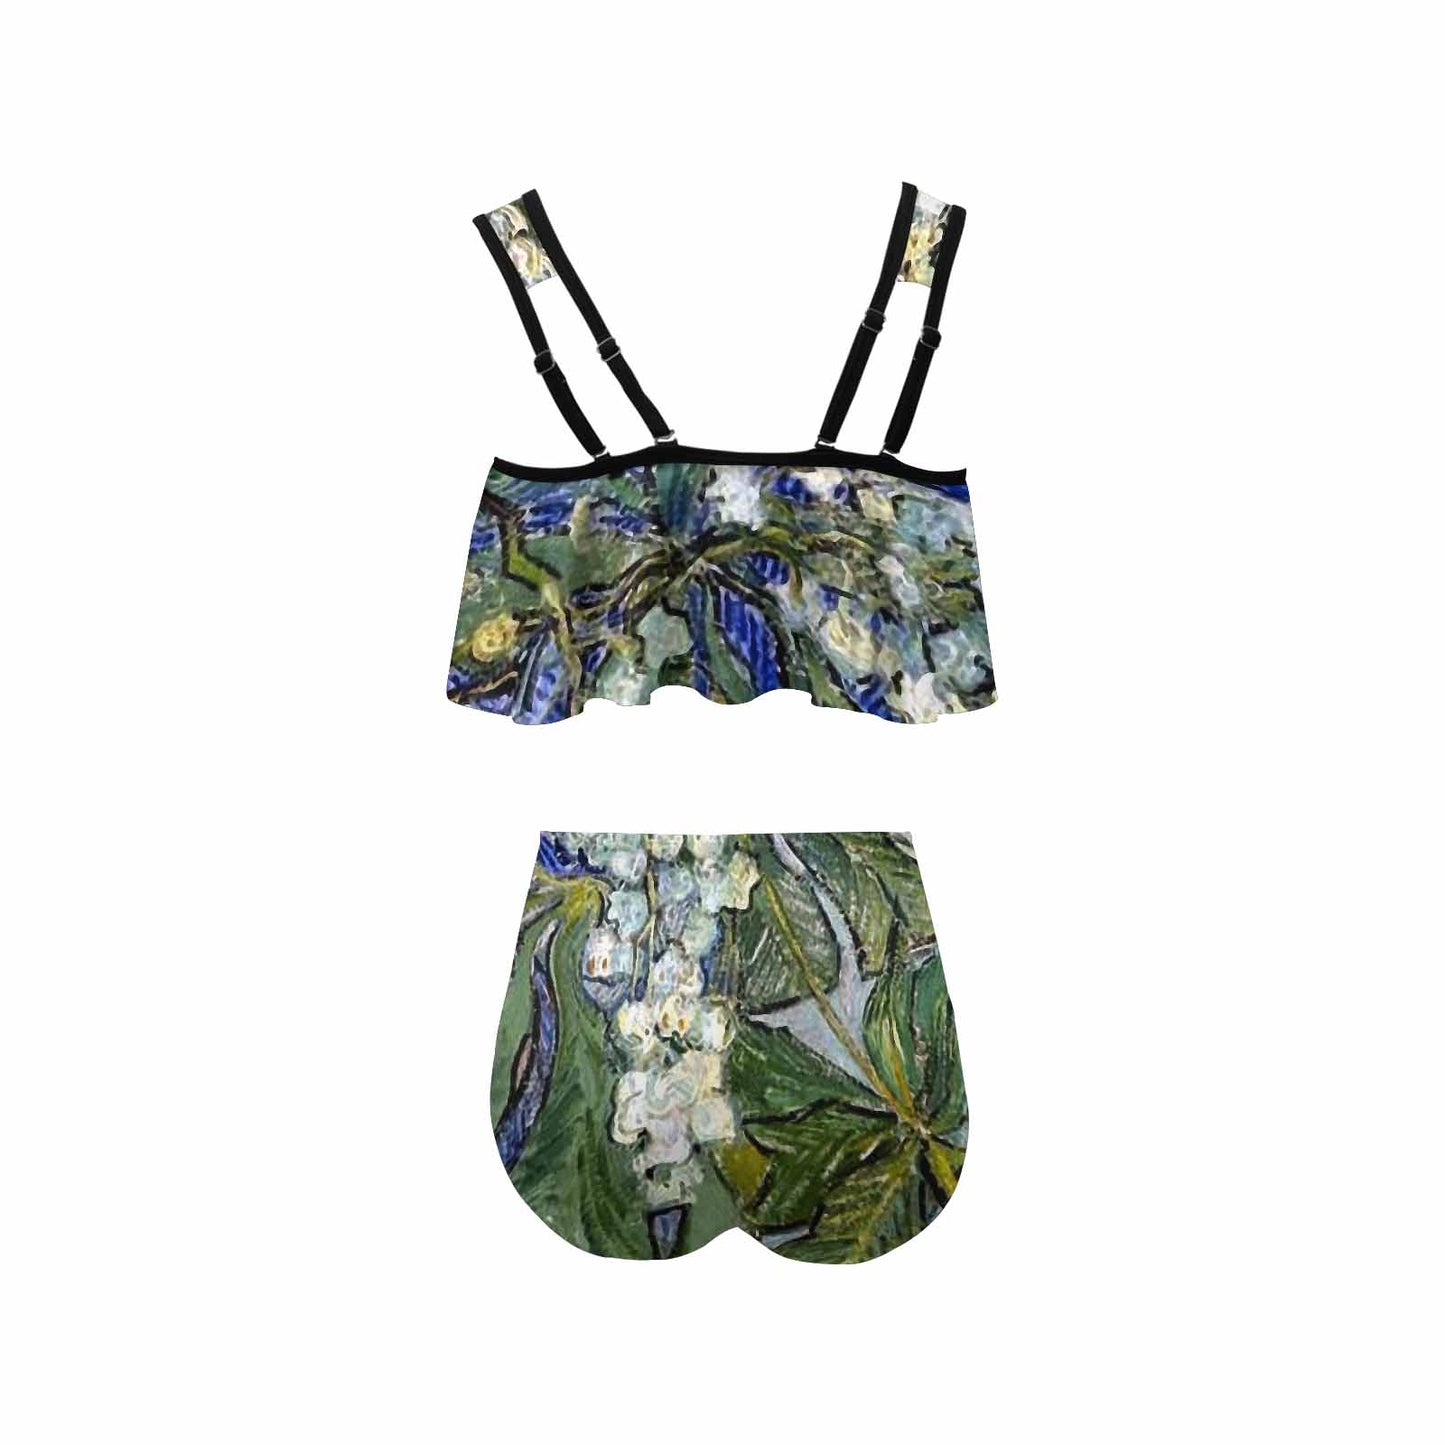 Vintage floral high waisted flounce top bikini, swim wear, Design 04